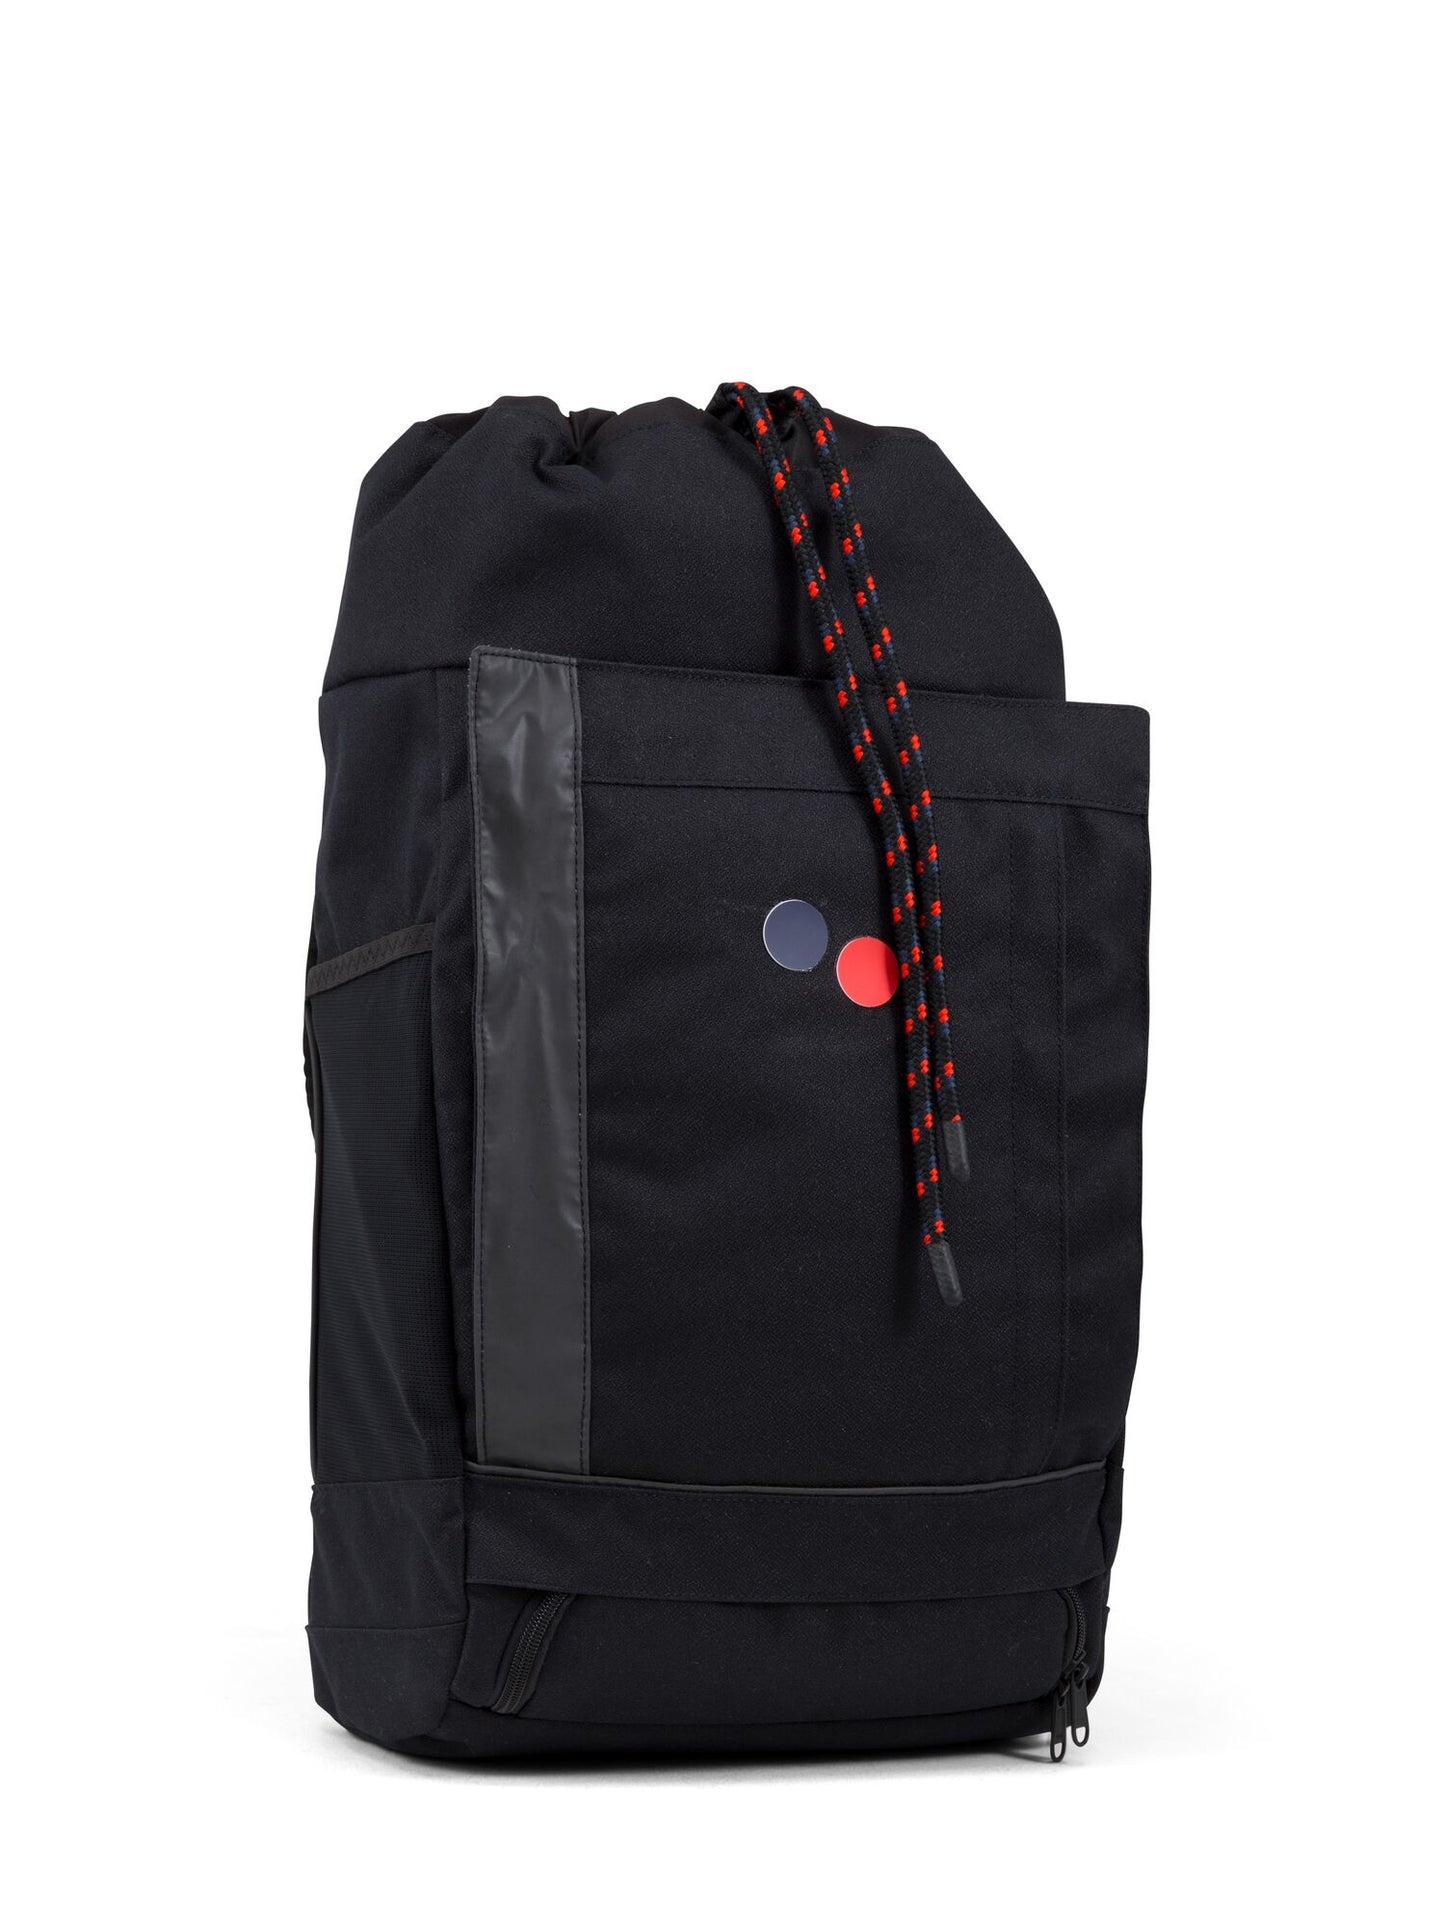 pinqponq-backpack-Blok-Medium-Licorice-Black-front